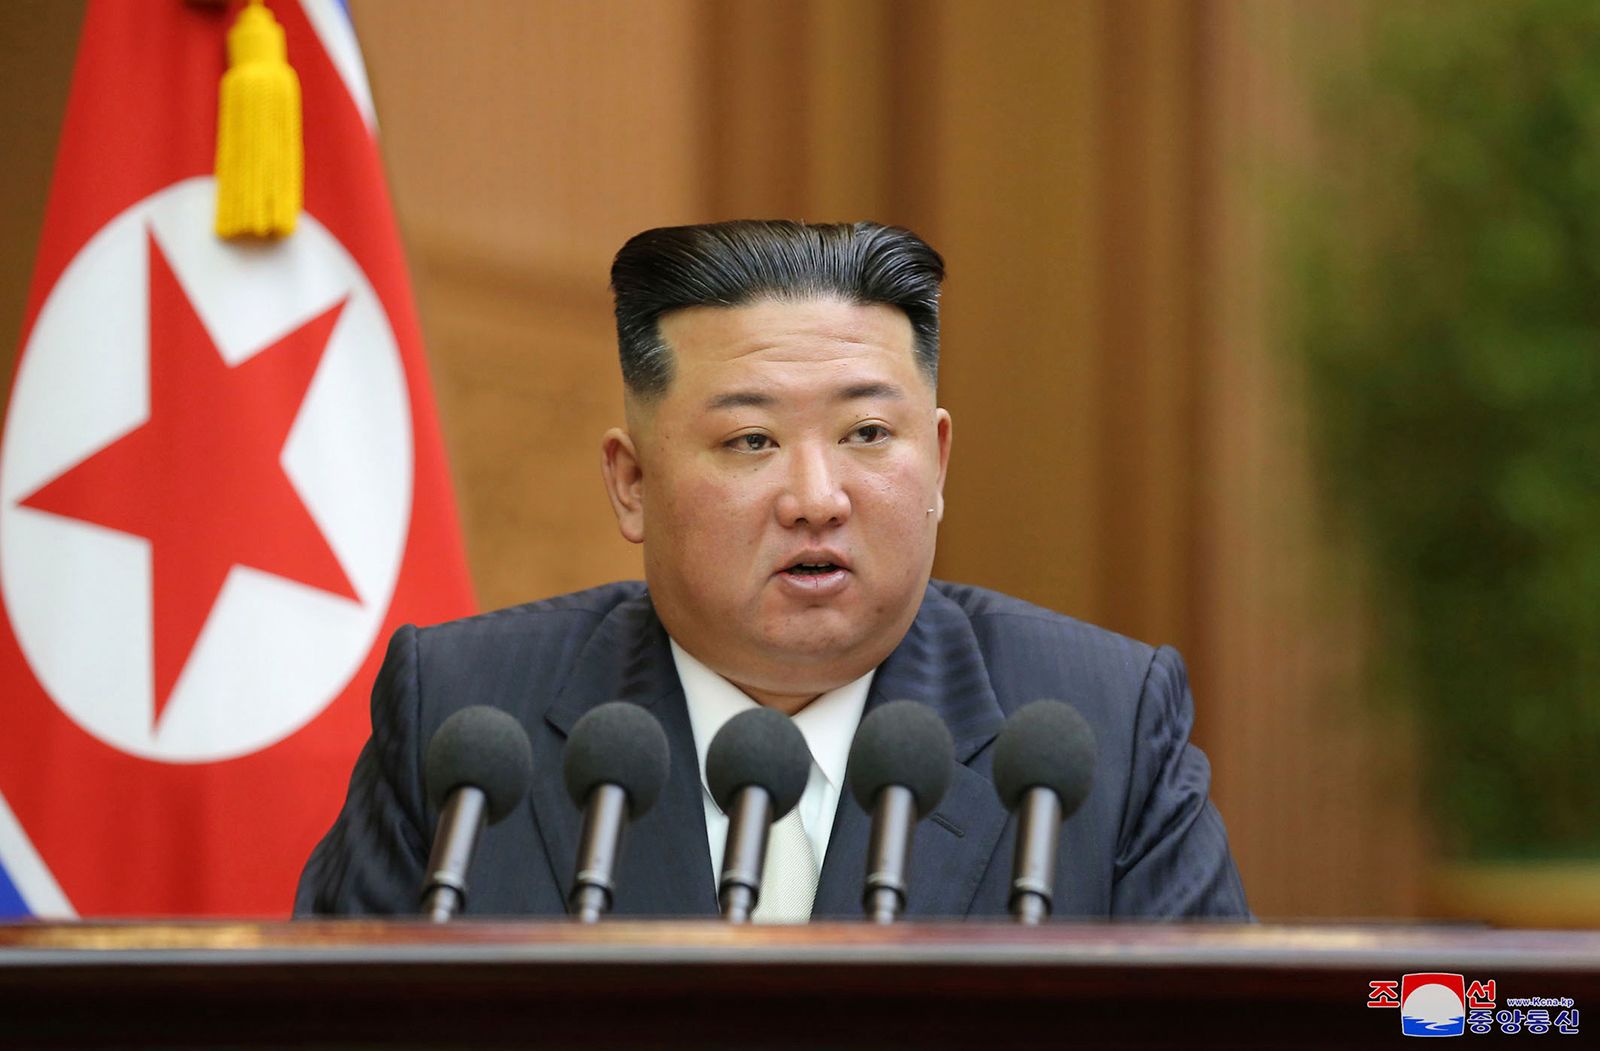 north korea nukes japan